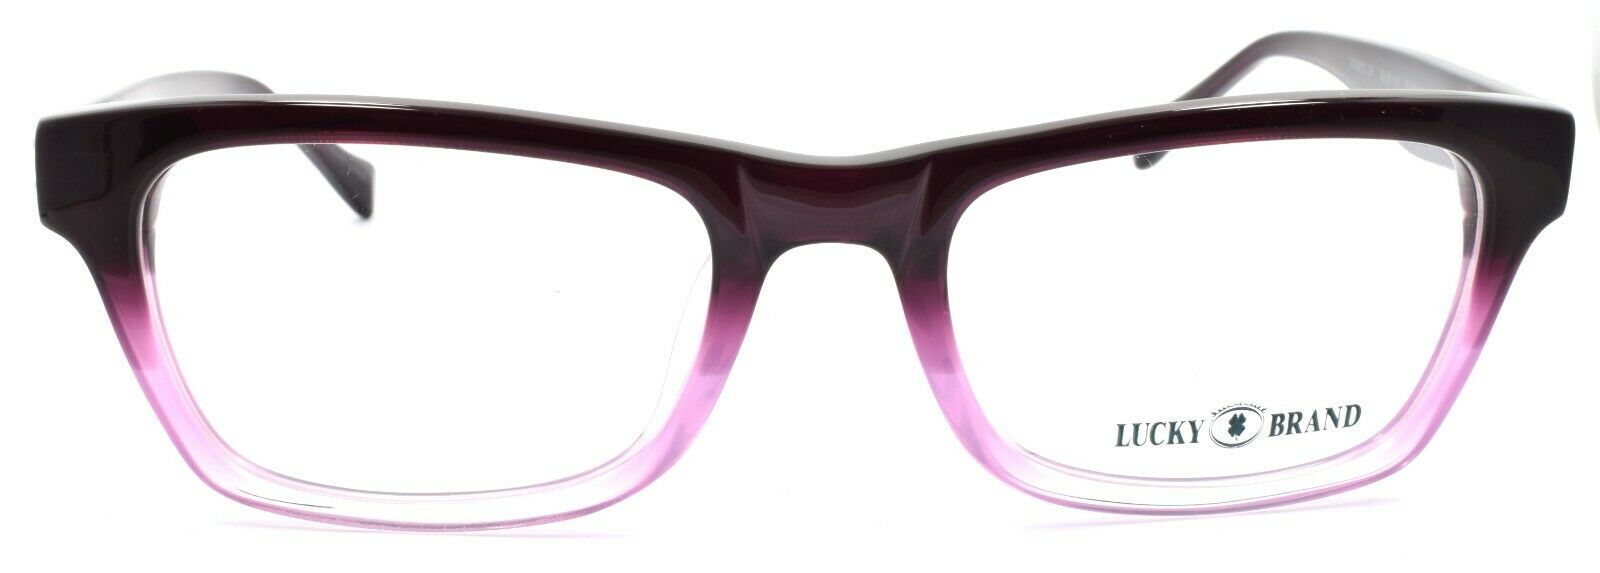 2-LUCKY BRAND Tropic UF Women's Eyeglasses Frames 52-20-140 Purple Gradient + CASE-751286248210-IKSpecs